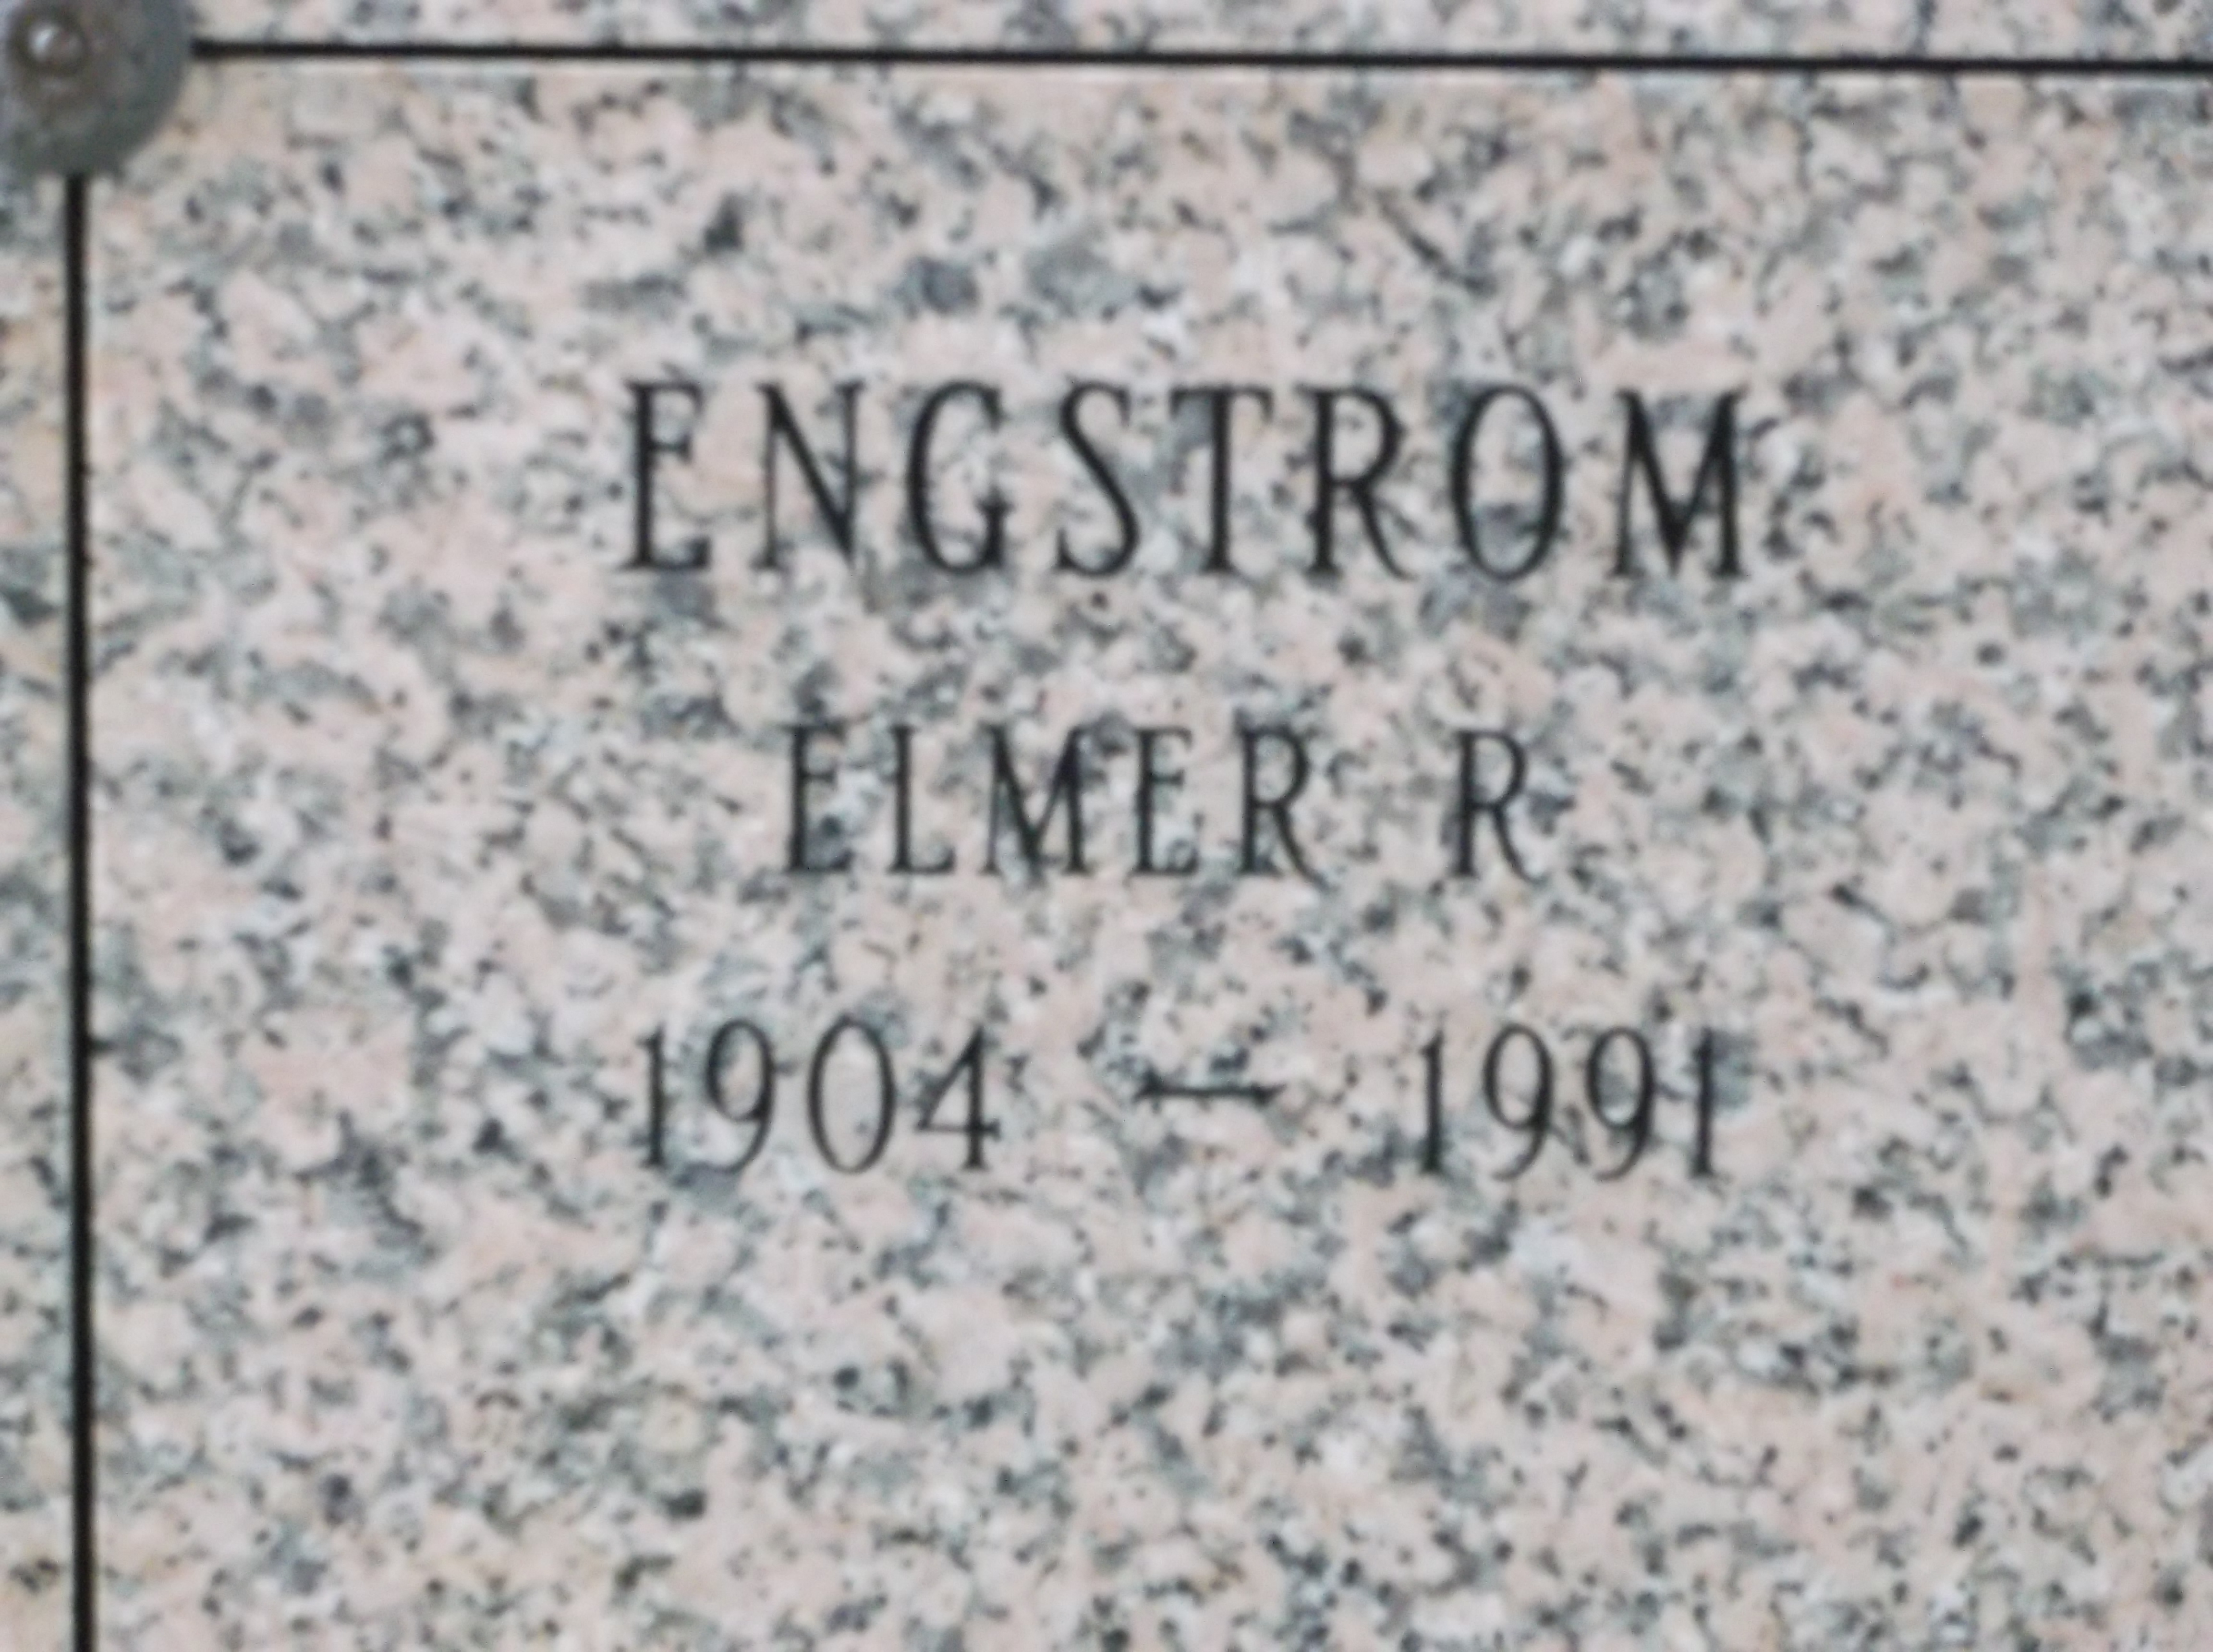 Elmer R Engstrom